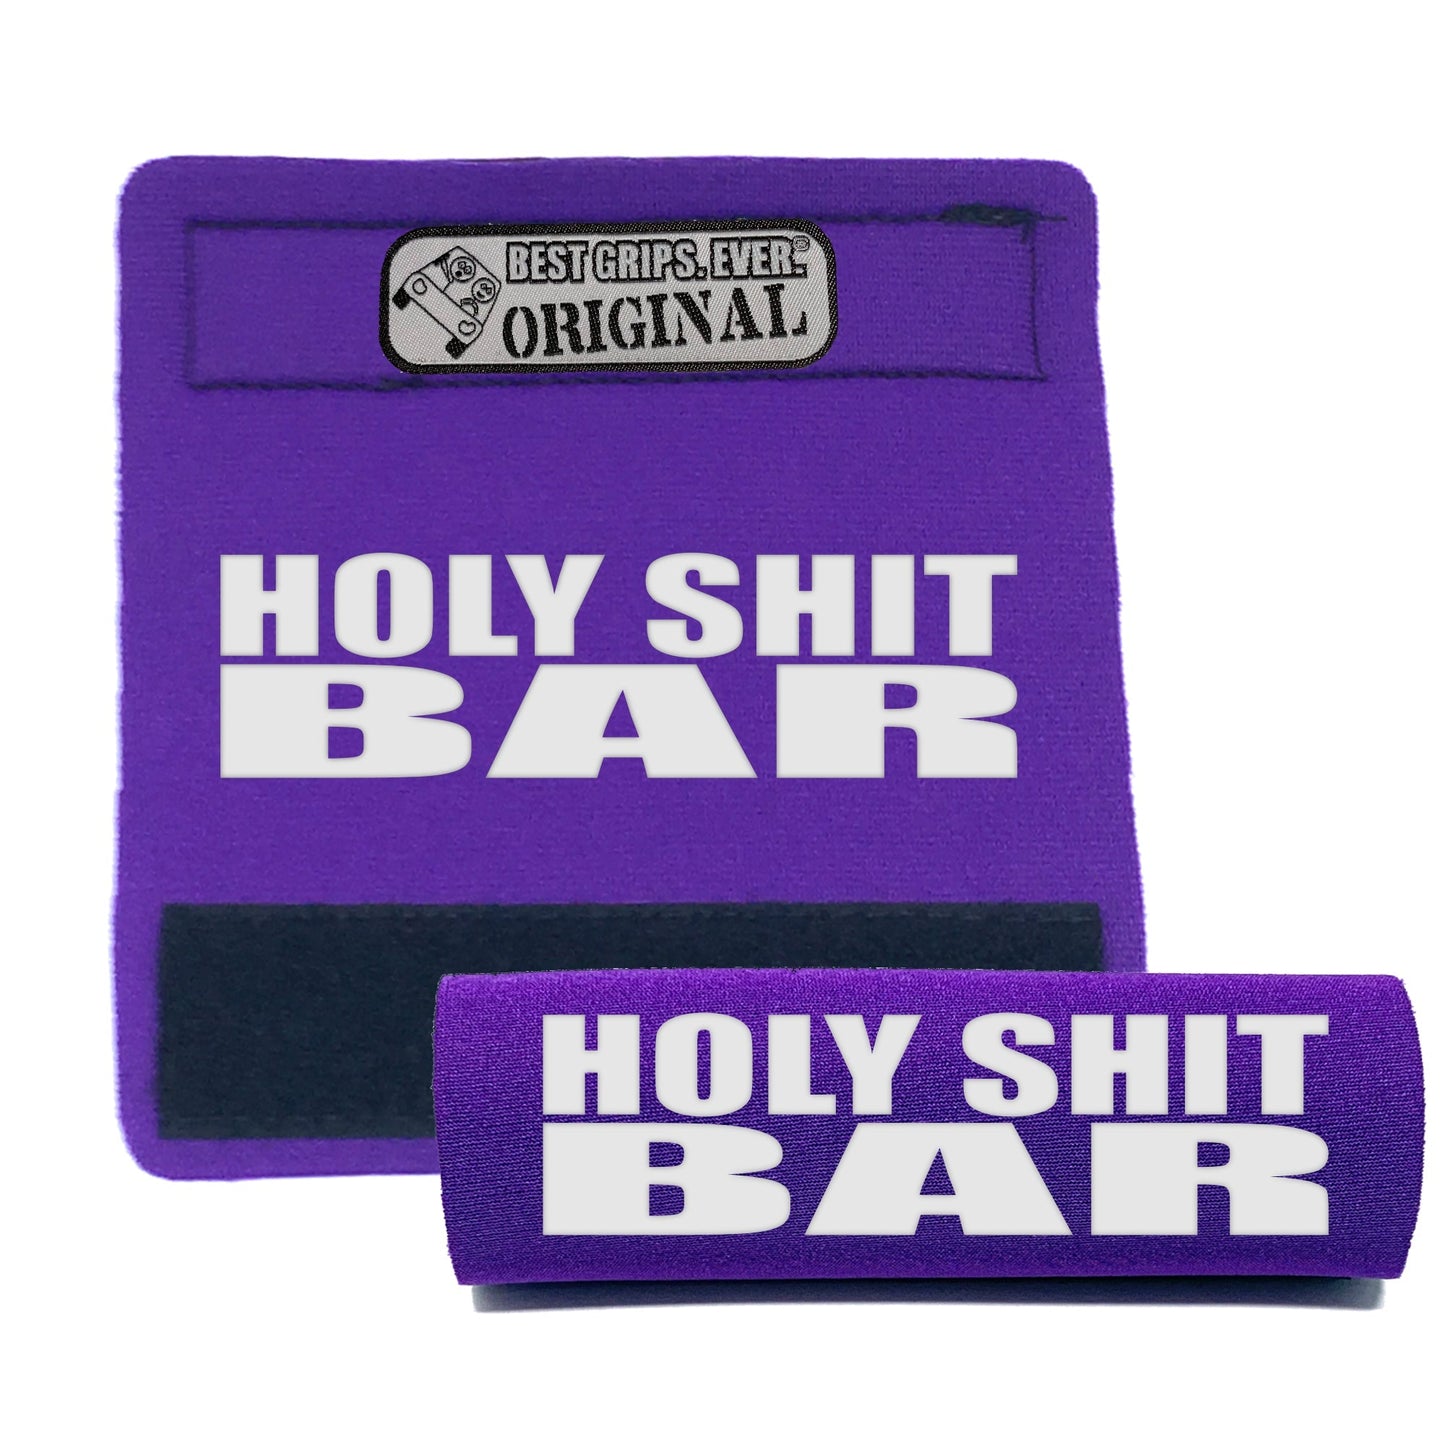 The Holy Shit Bar® (1 Unit)